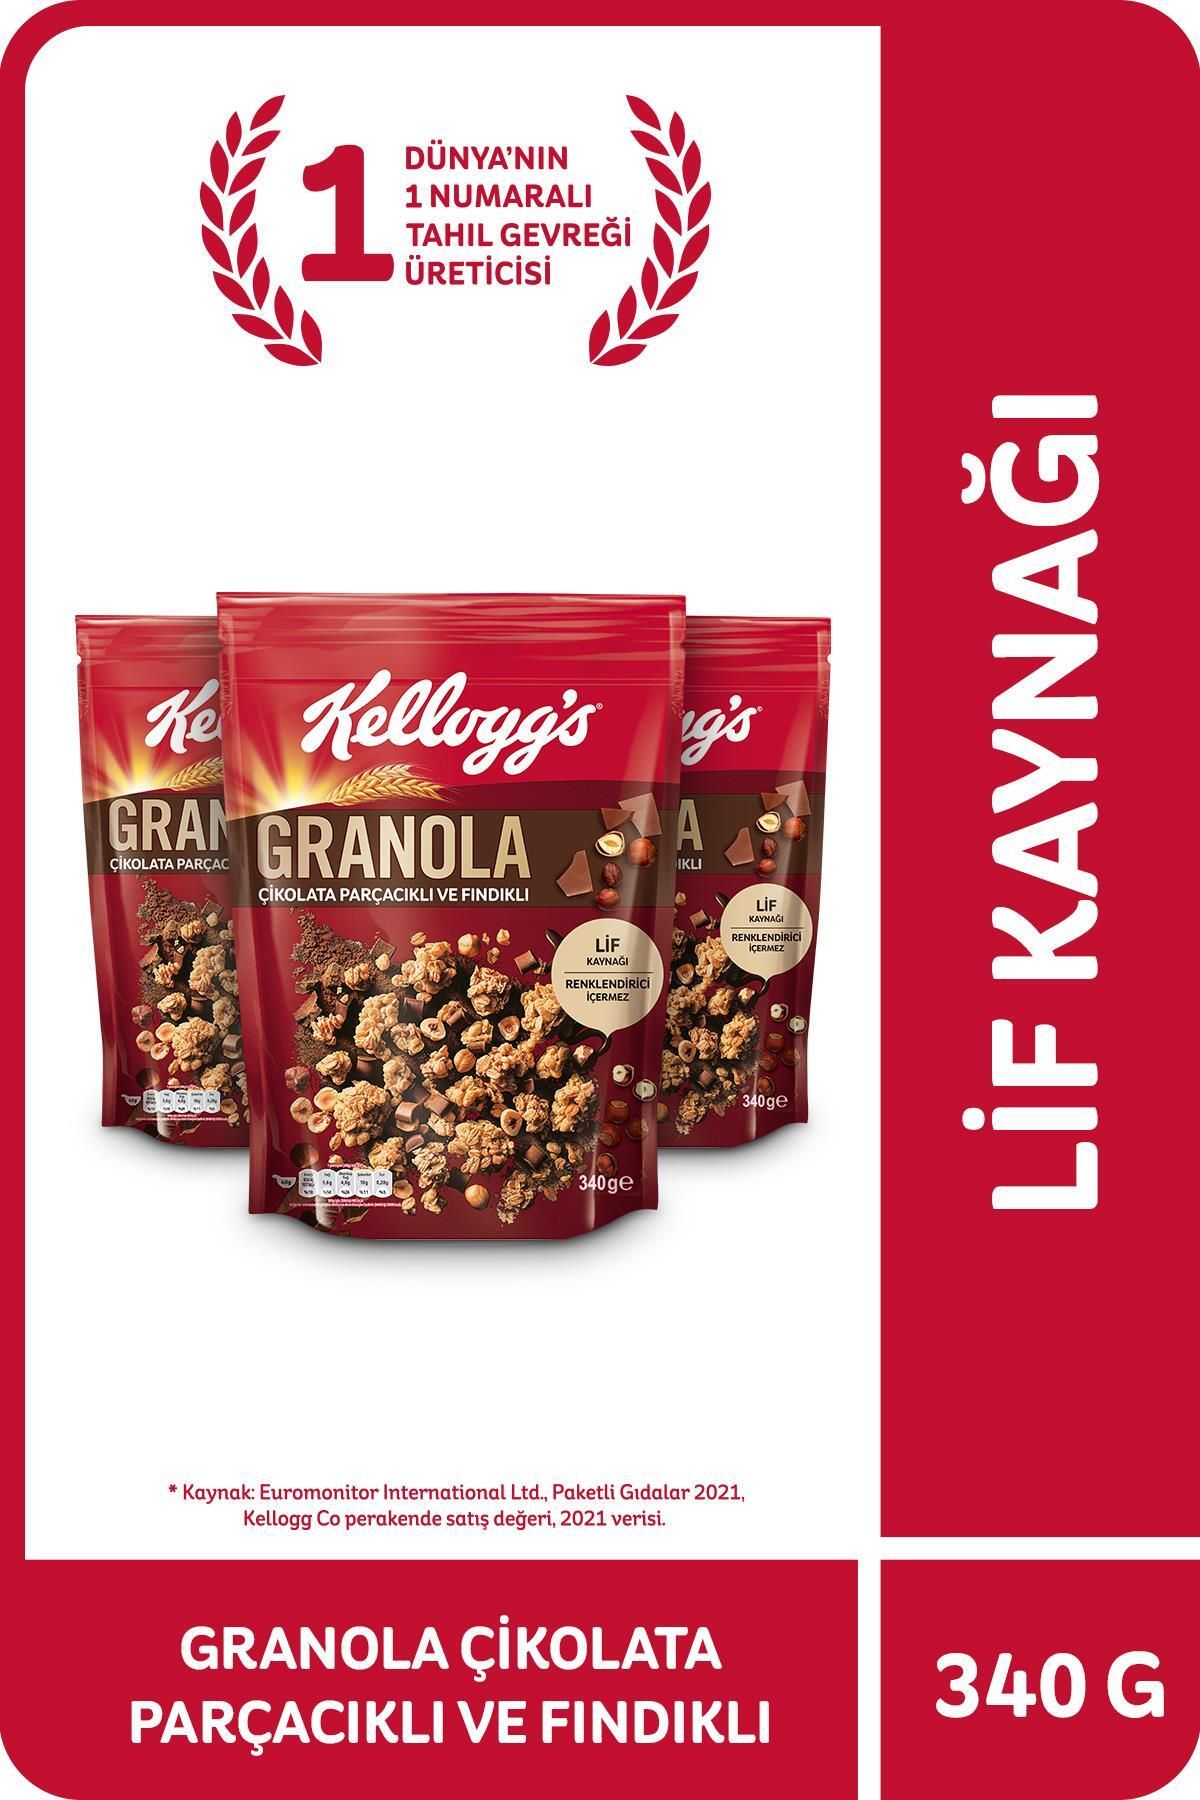 Kellogg's Çikolata Parçacıklı&fındıklı Granola 340 gr X3 Adet,%44 Yulaf Içerir,lif Kaynağı